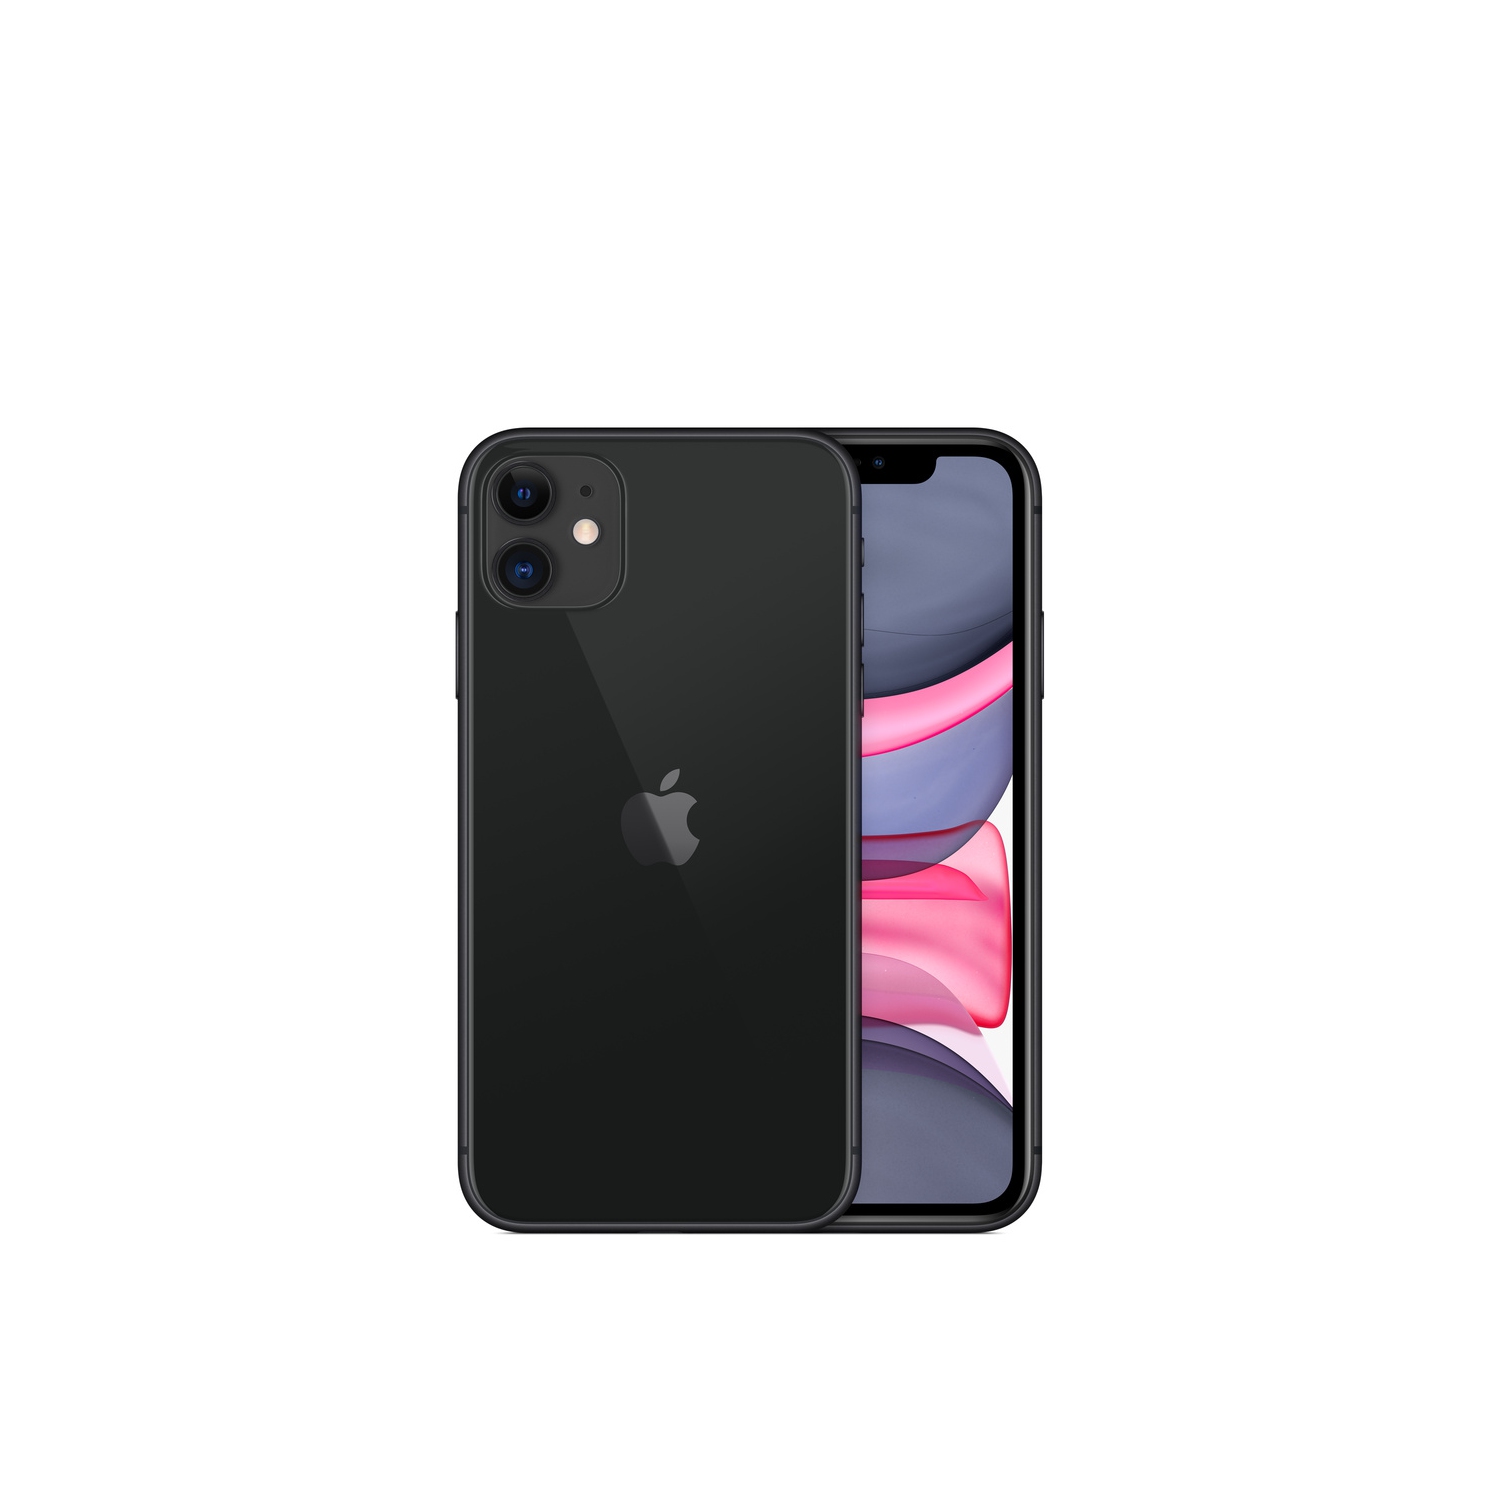 Apple Iphone 11 - 64GB - Unlocked - New Sealed - Black - 1 yr apple warranty